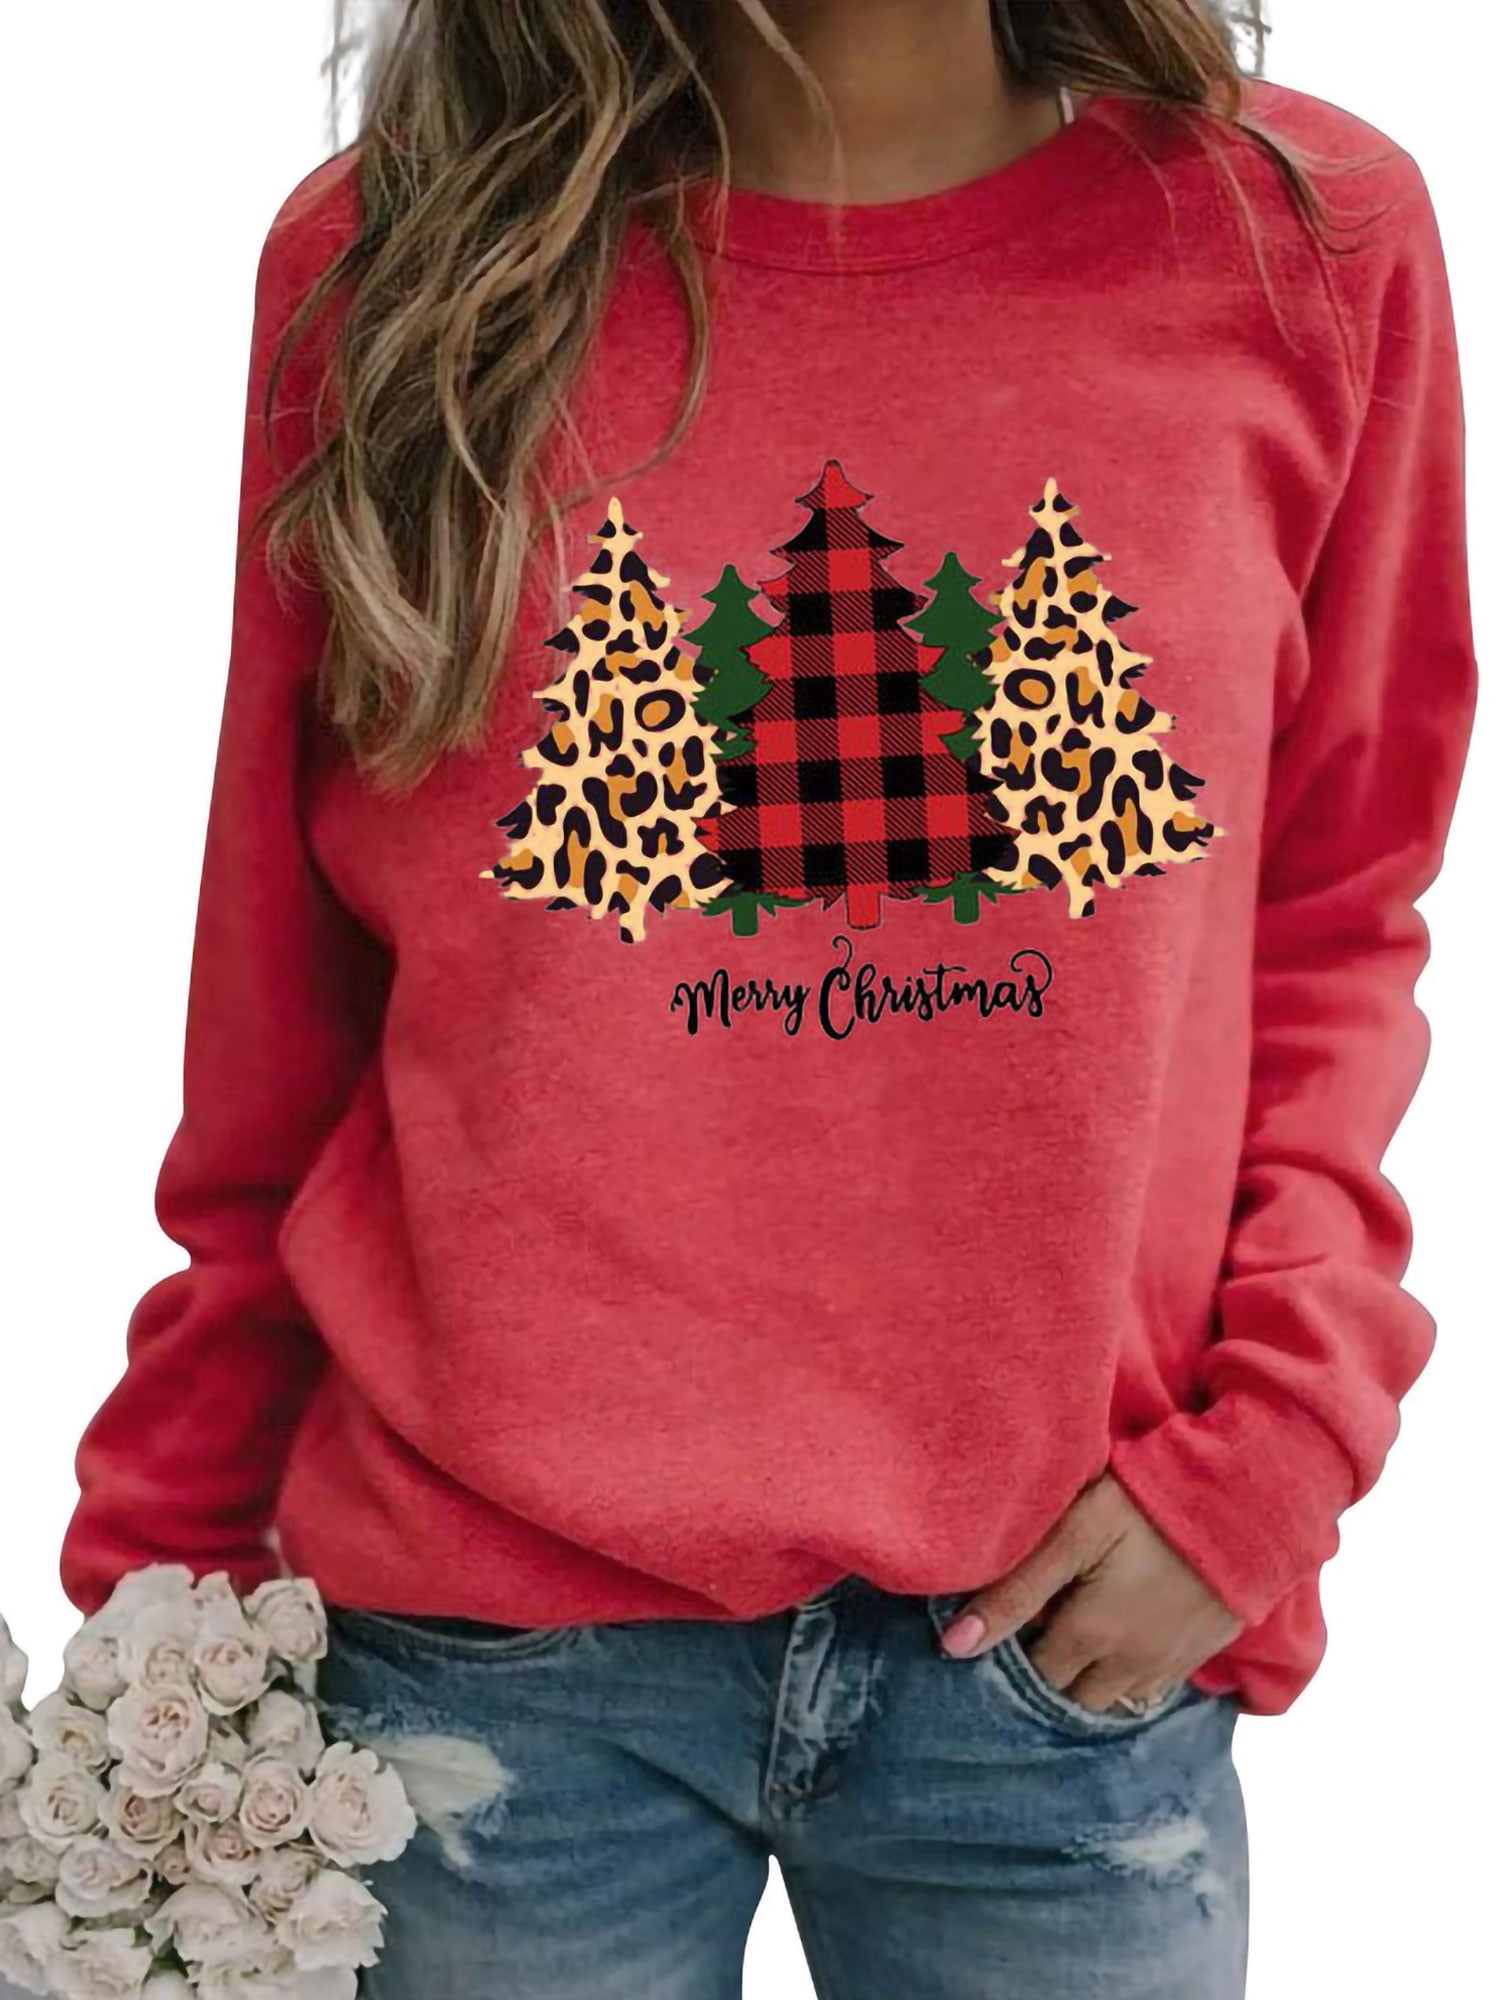 Christmas Eve Sweatshirt,New Years Eve Sweater,Womens Chistmas Sweatshirt,Chistmas Crewneck Pullover Sweater,Cute Winter Holiday Gift,Unisex